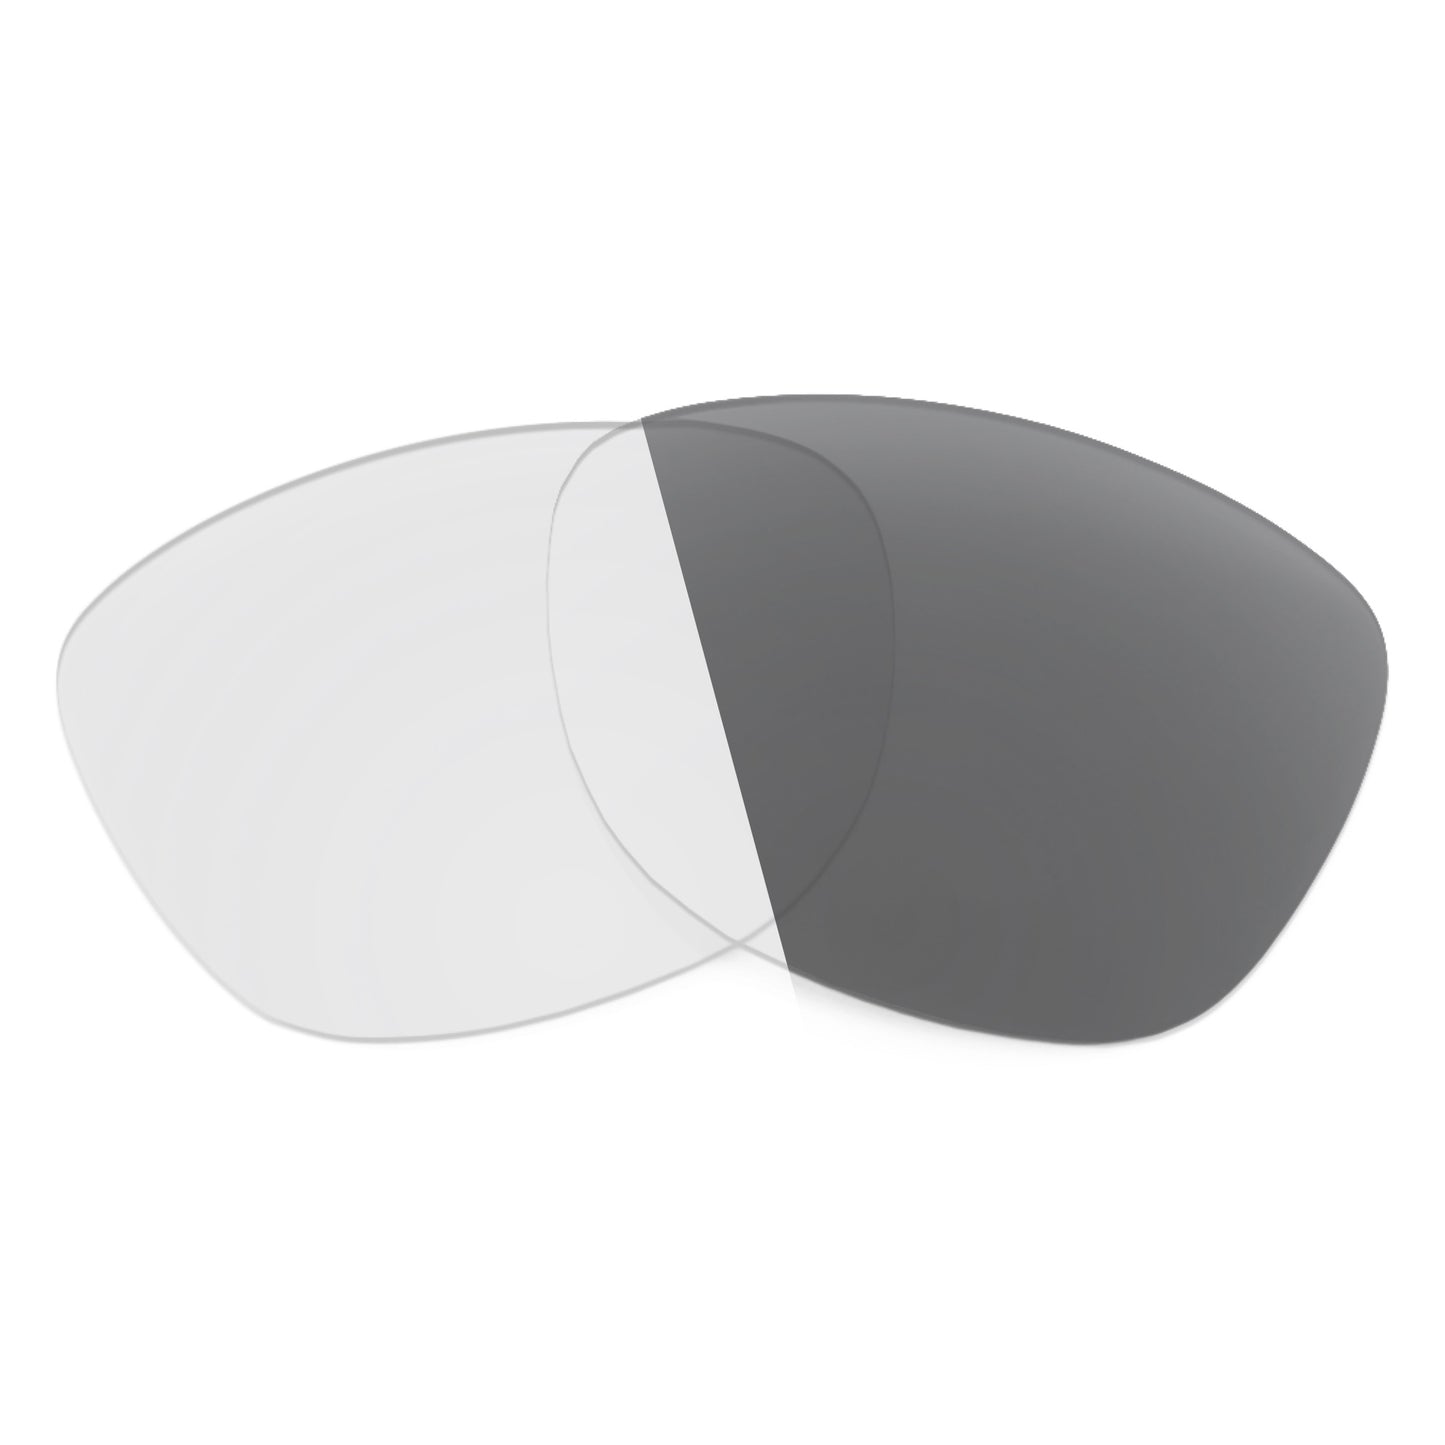 Revant replacement lenses for Maui Jim Kila MJ819 Non-Polarized Adapt Gray Photochromic